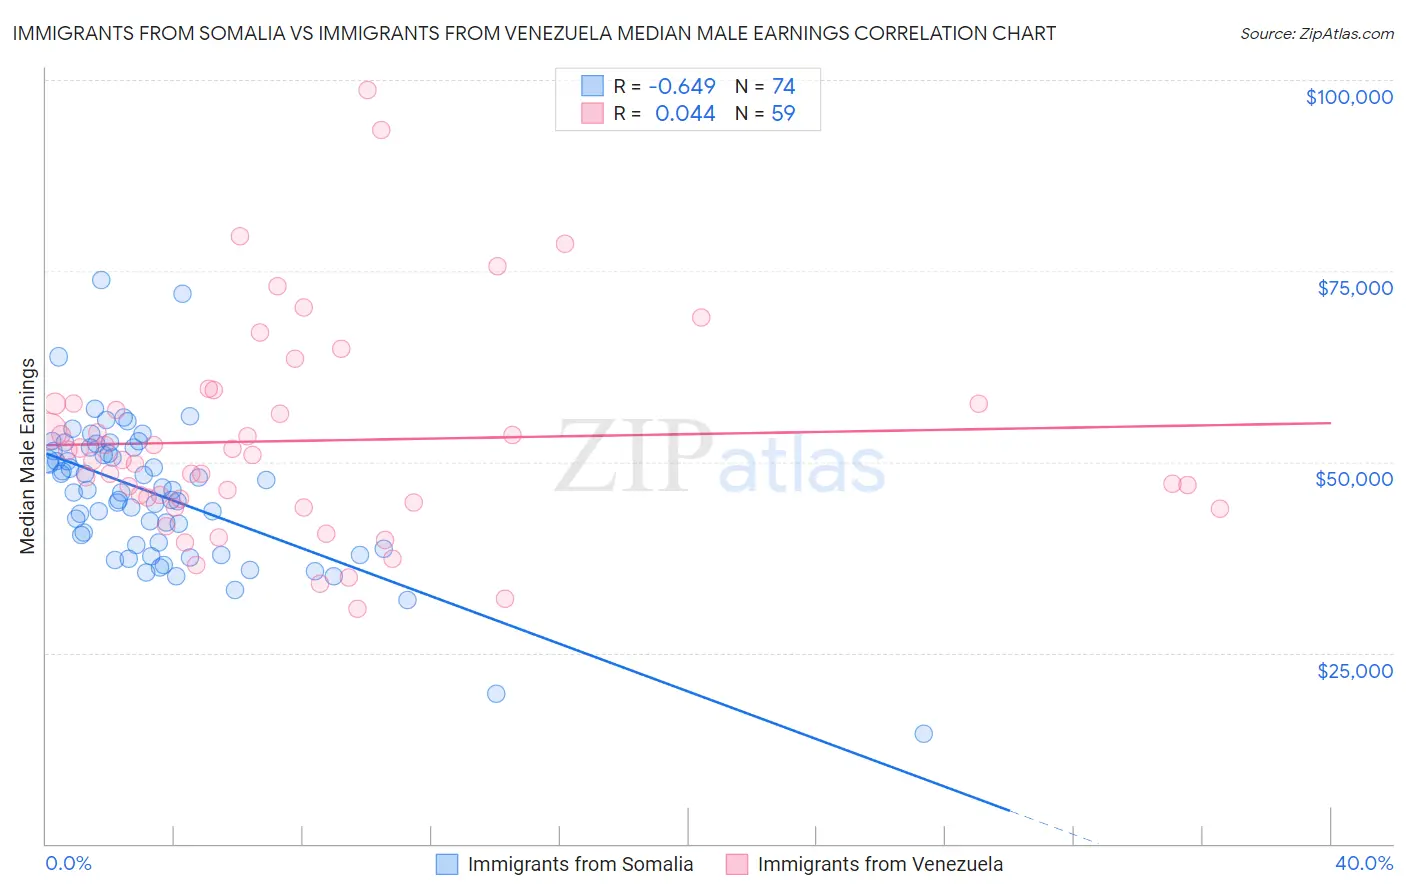 Immigrants from Somalia vs Immigrants from Venezuela Median Male Earnings